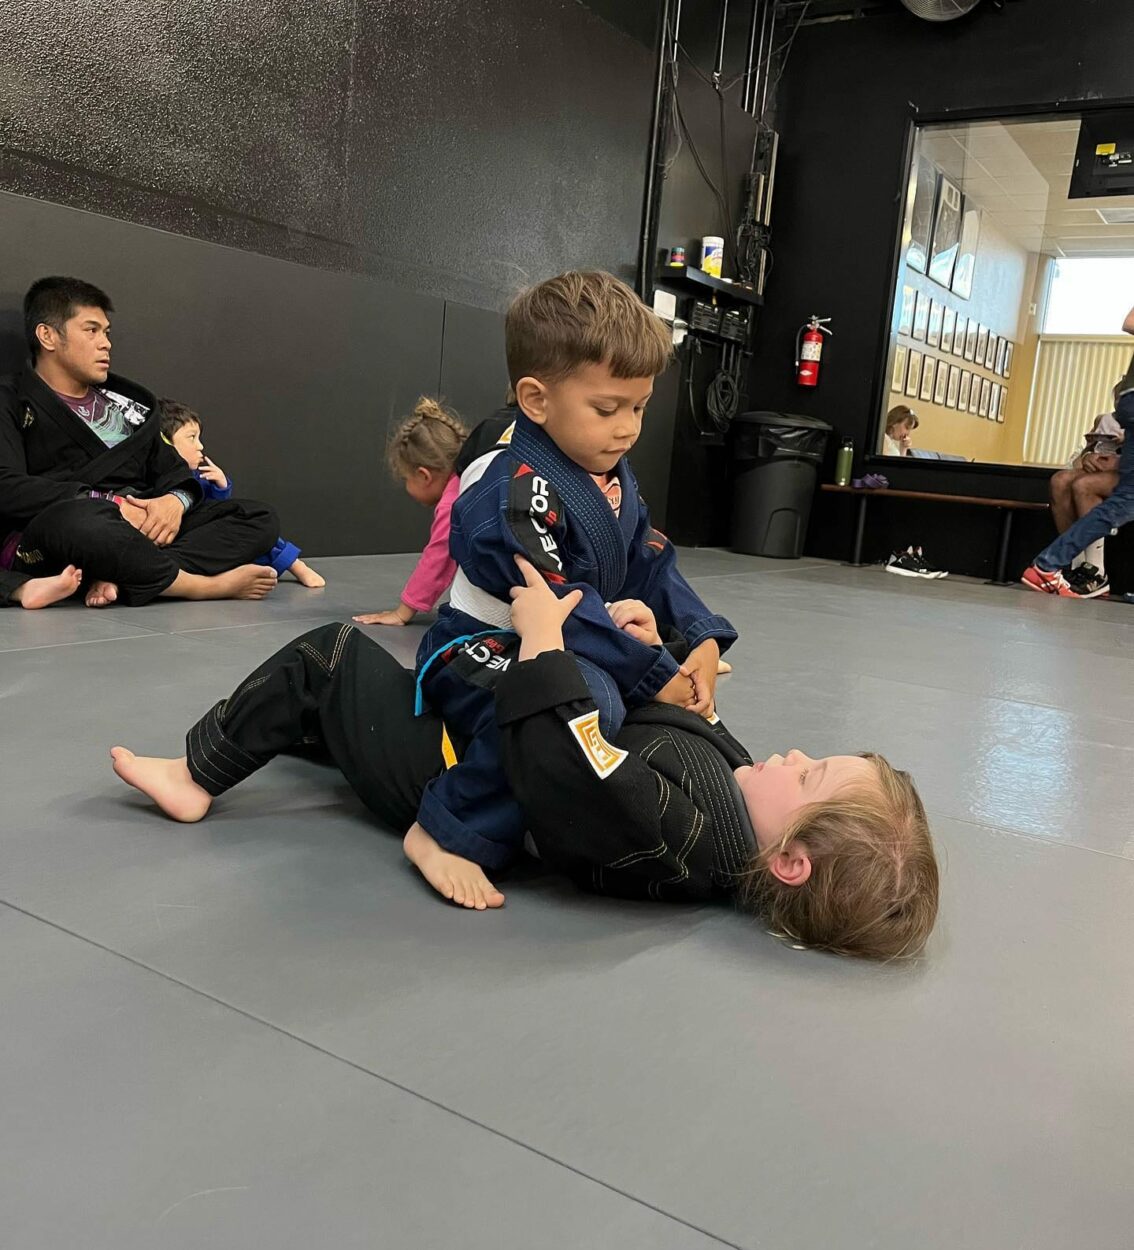 Cobrinha Brazilian Jiu Jitsu Academy Las Vegas